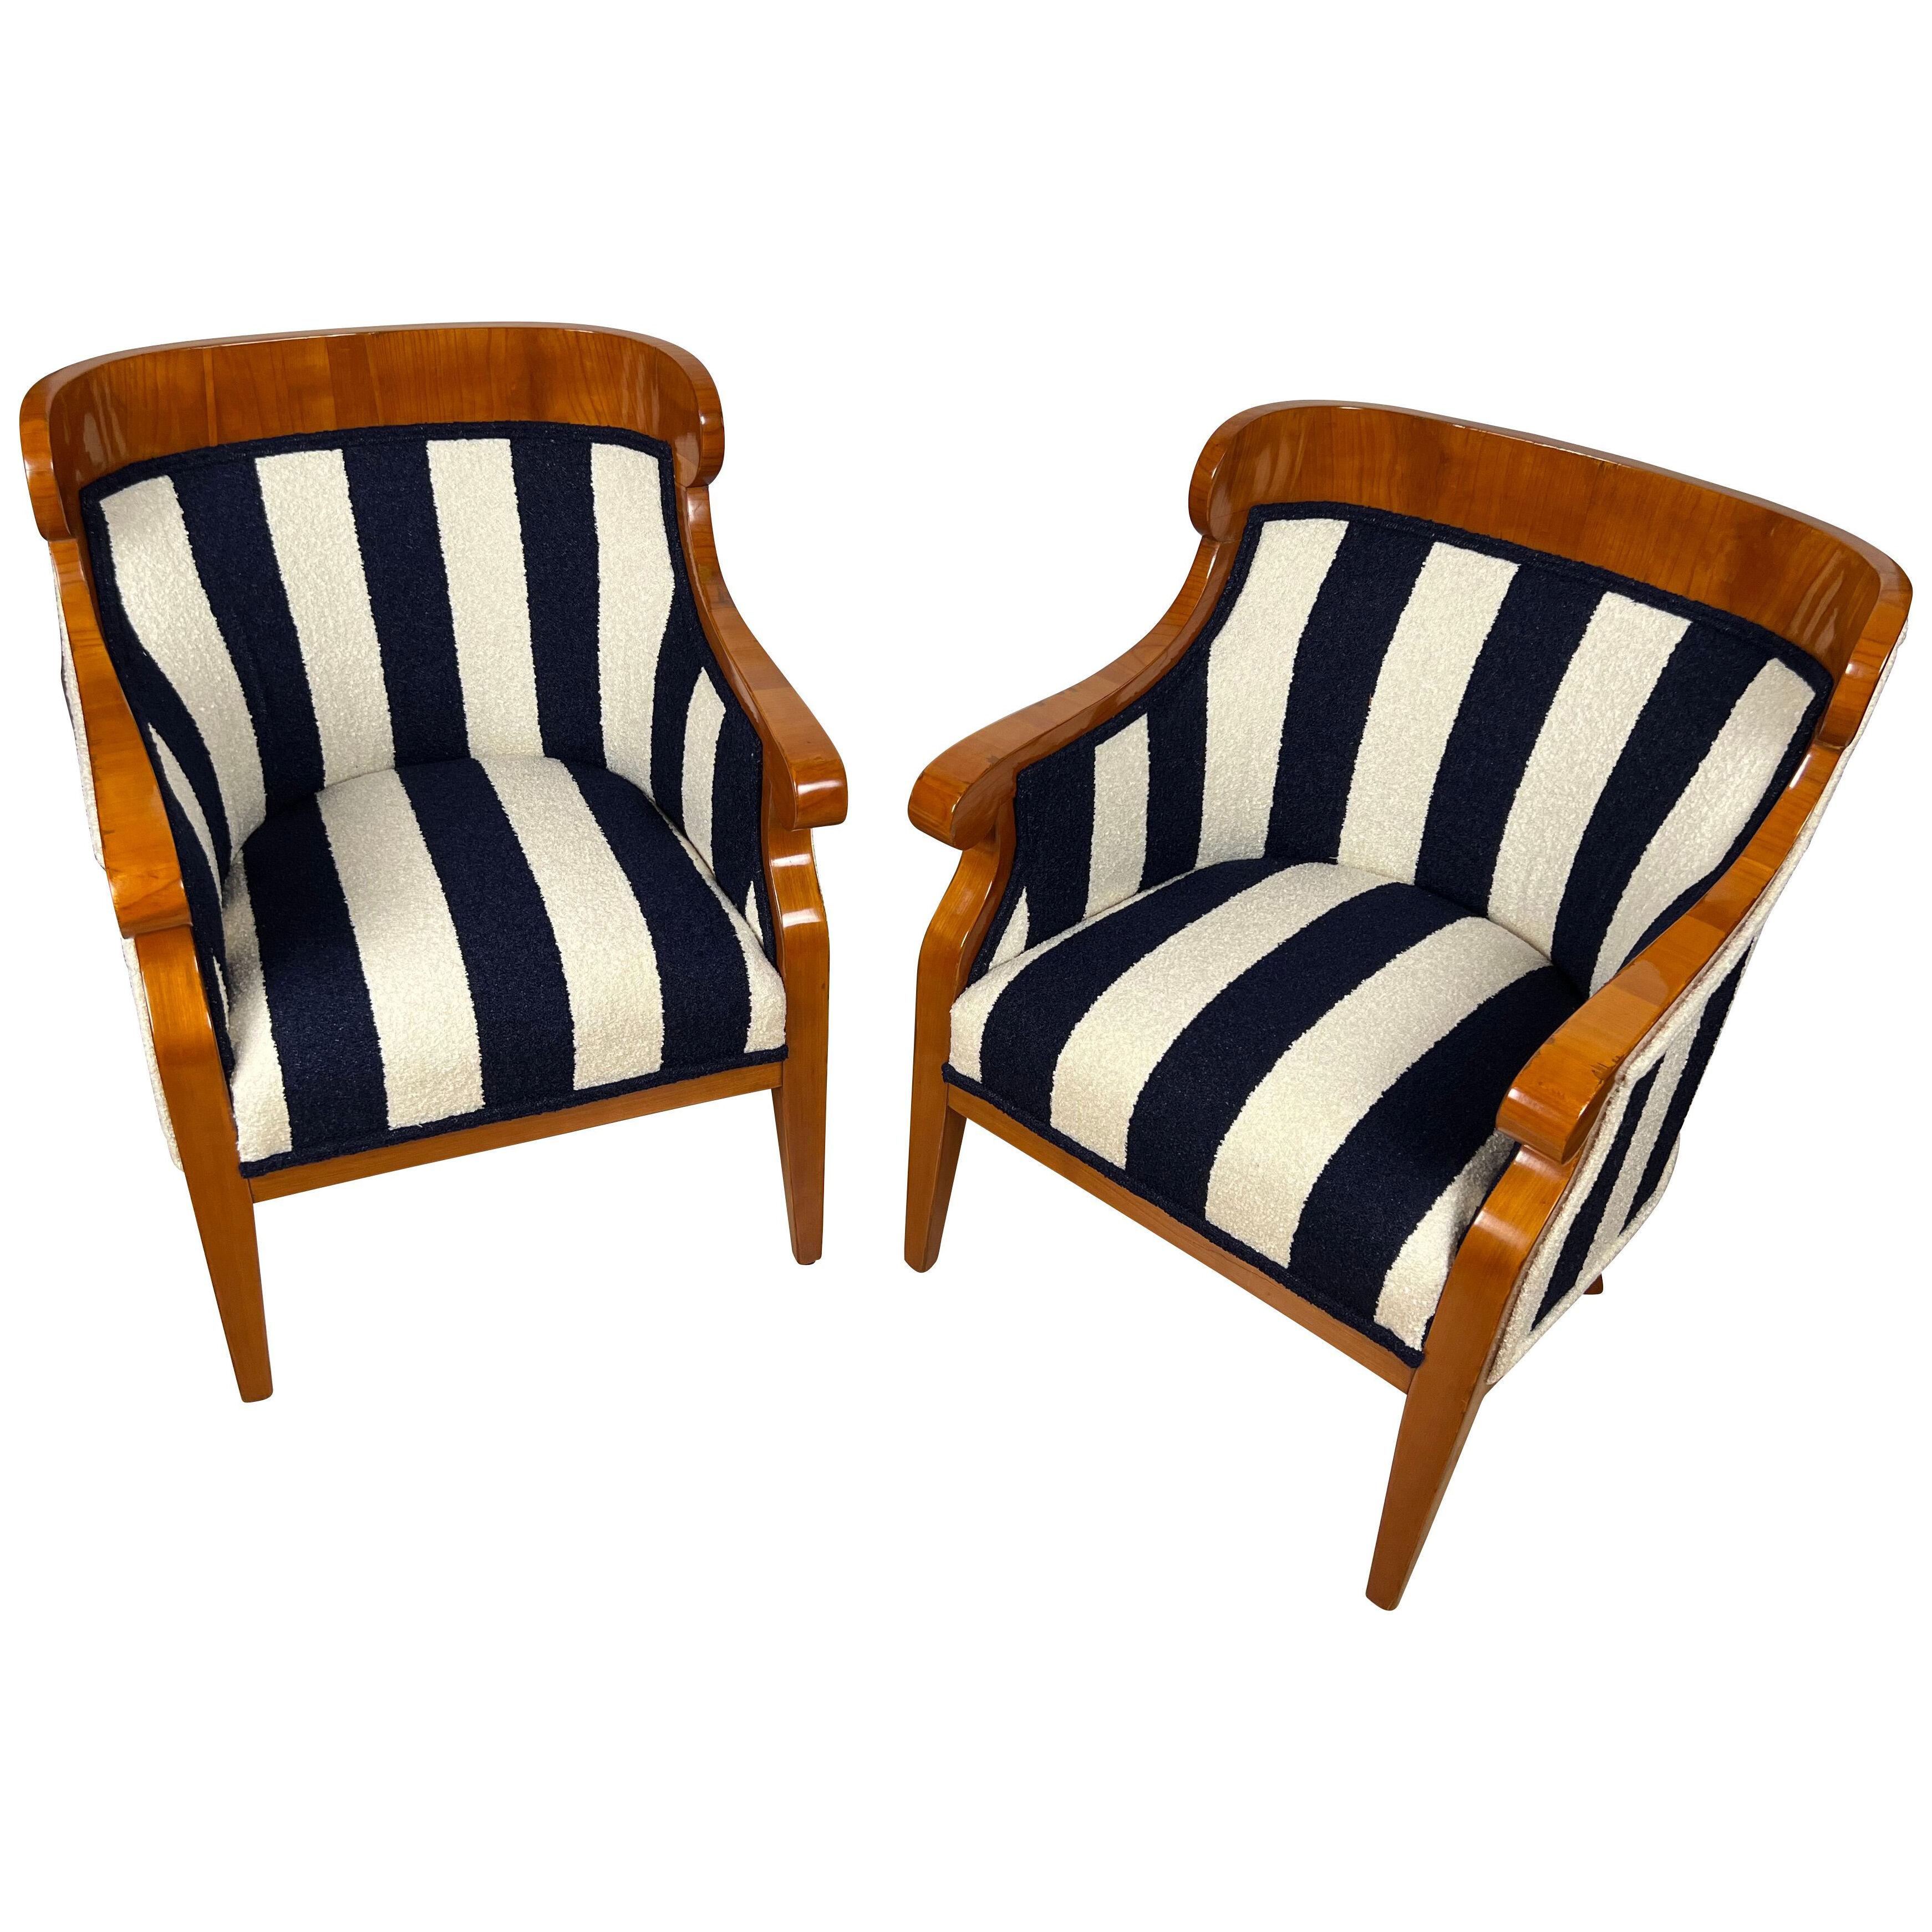 Biedermeier Bergere Chairs (Pair), Cherry Veneer, Austria/Vienna, 19th century	